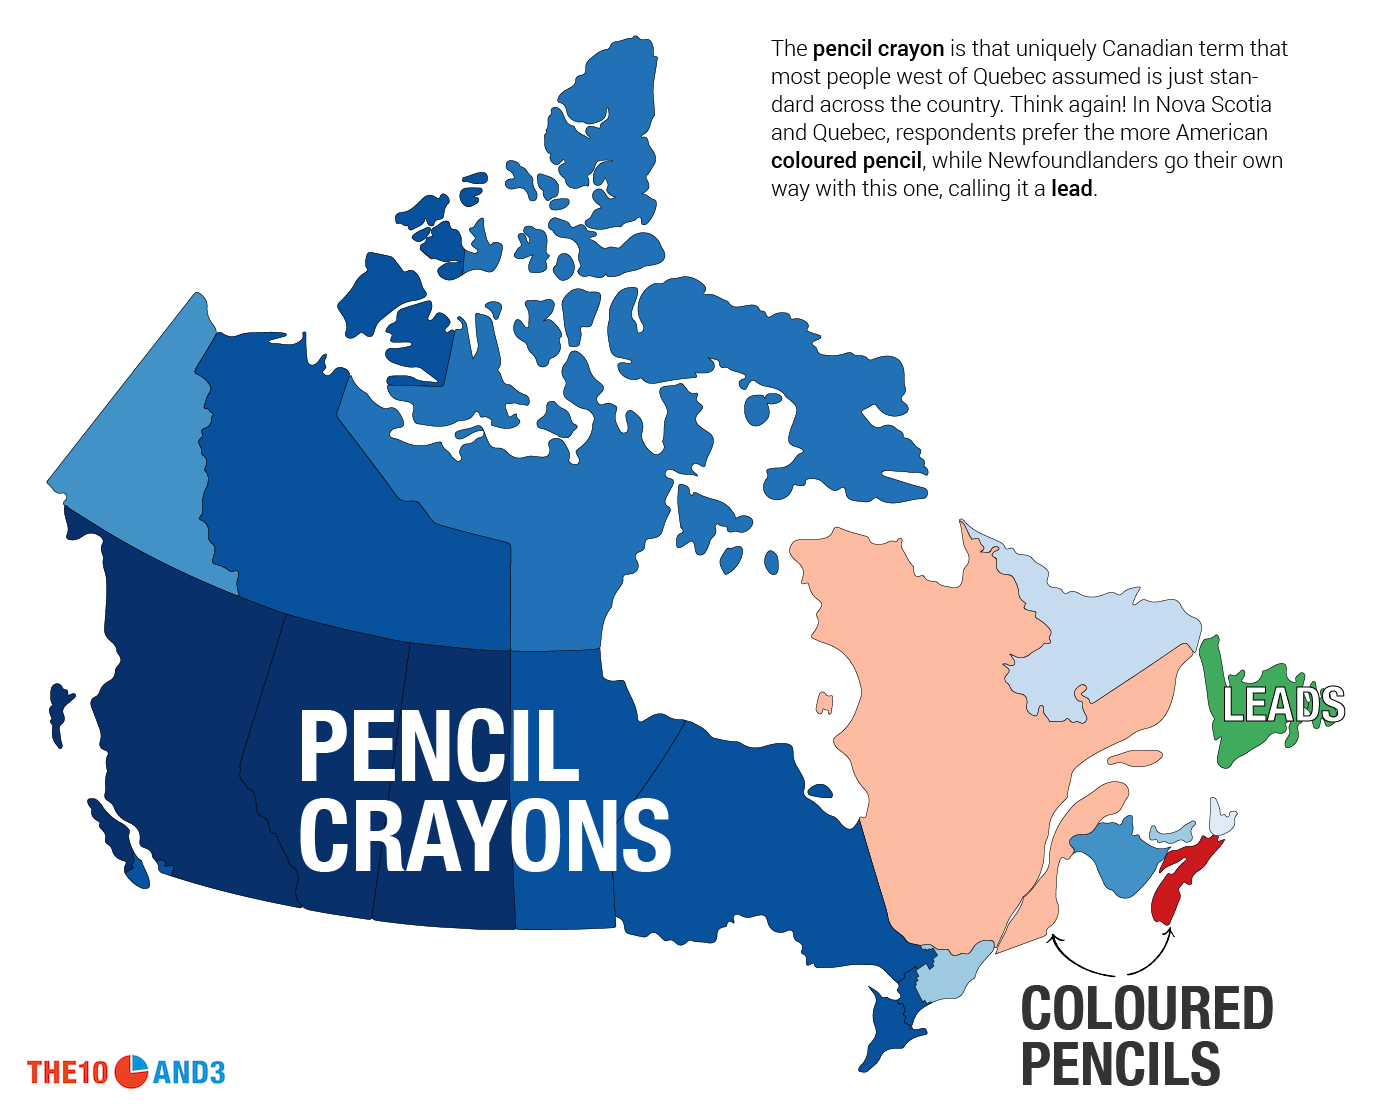 Pencil Crayons vs. Coloured Pencils vs. Leads